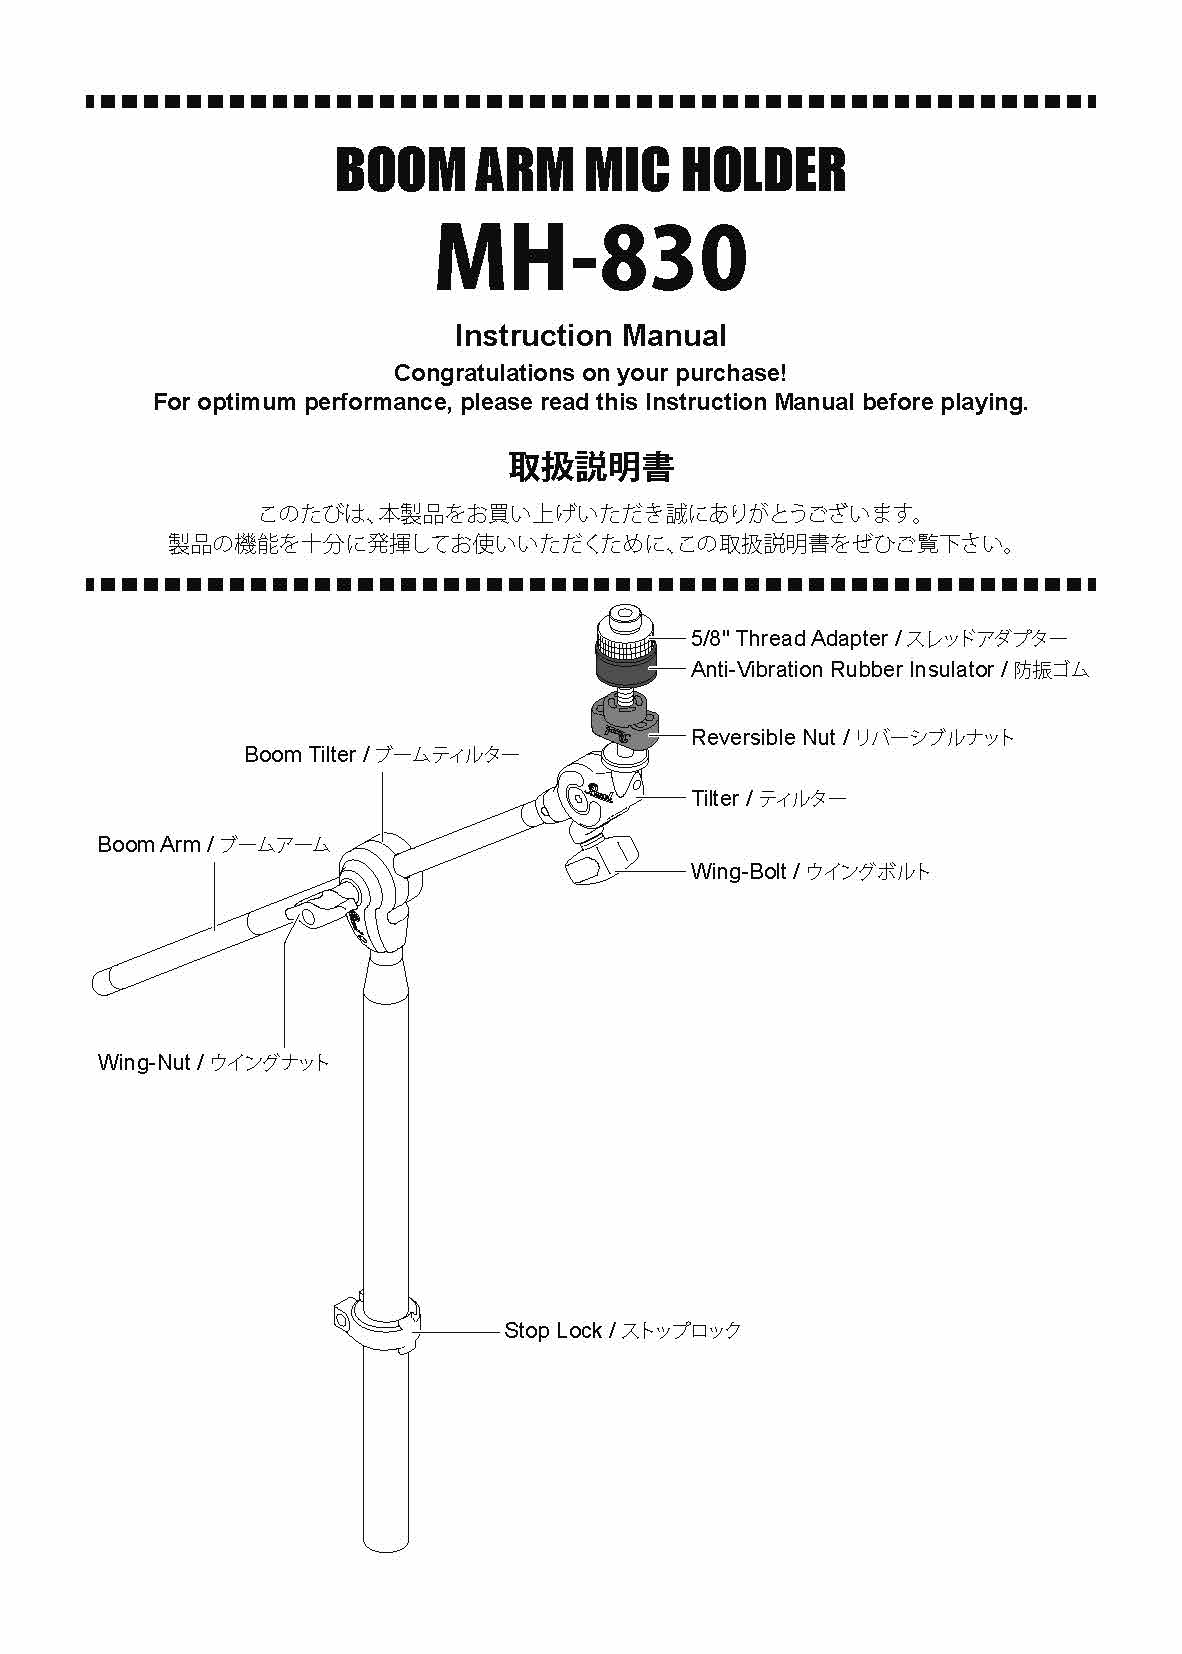 MH830 BOOM ARM MIC HOLDER Manual